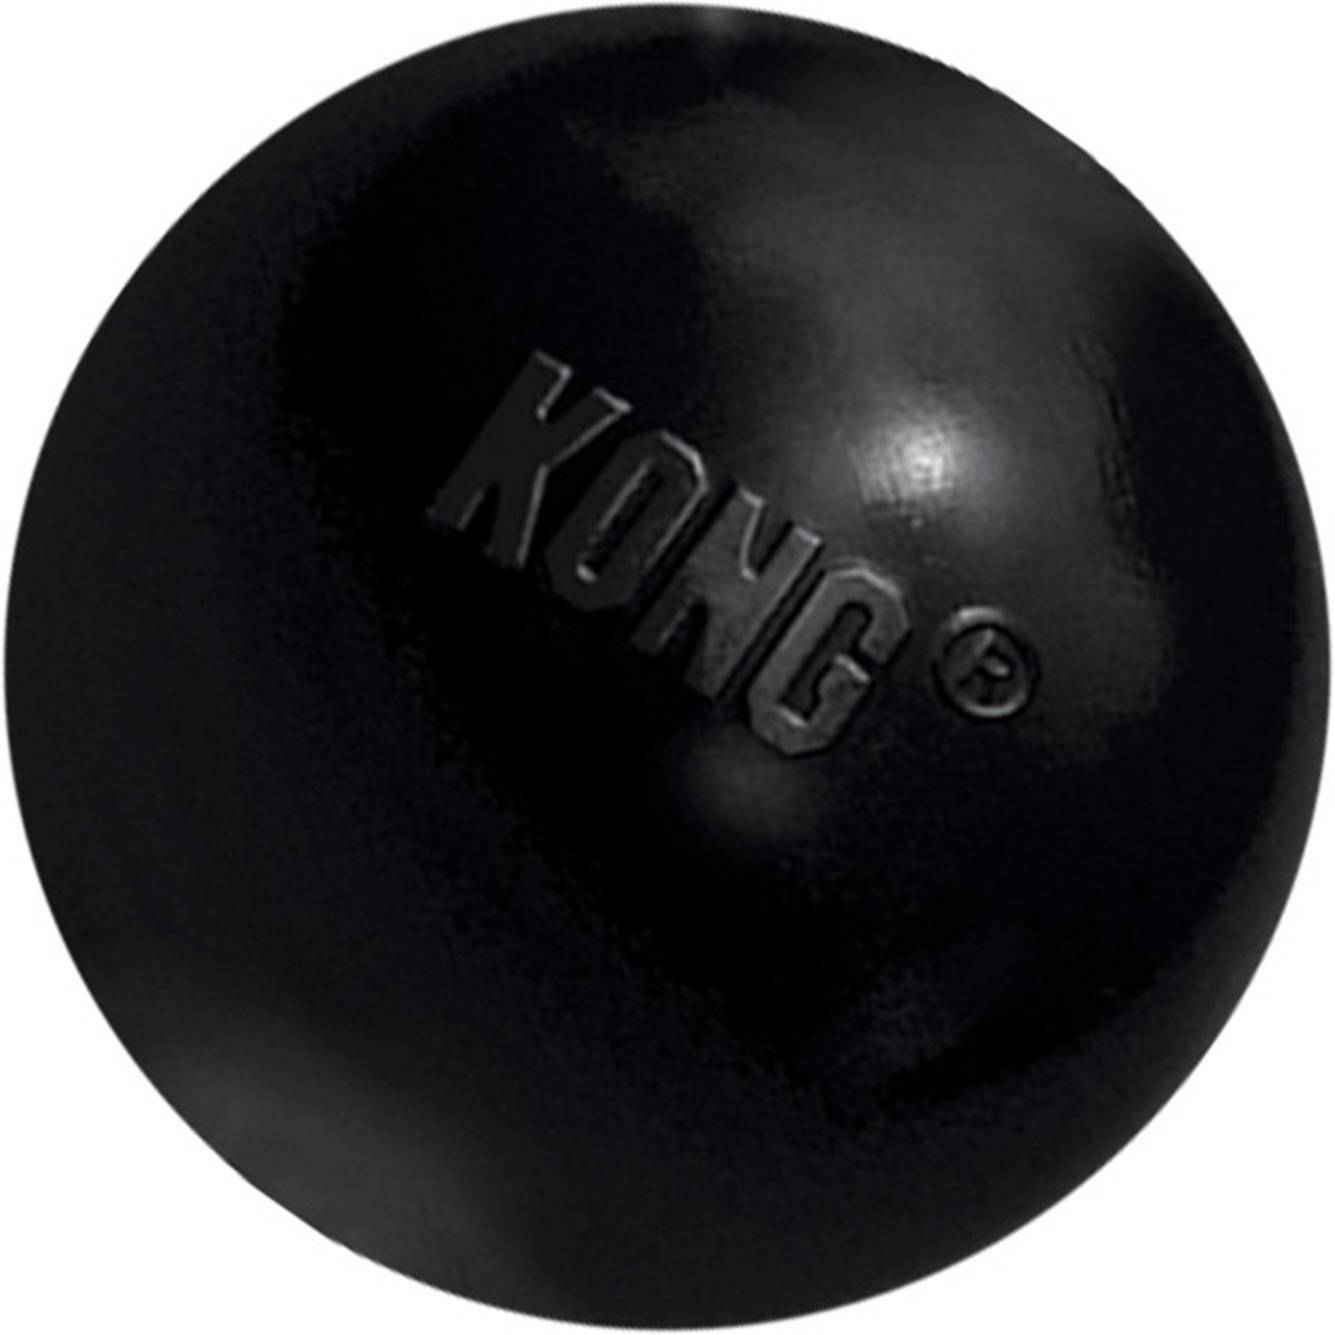 Kong Extreme Ball Dog Toy (1)